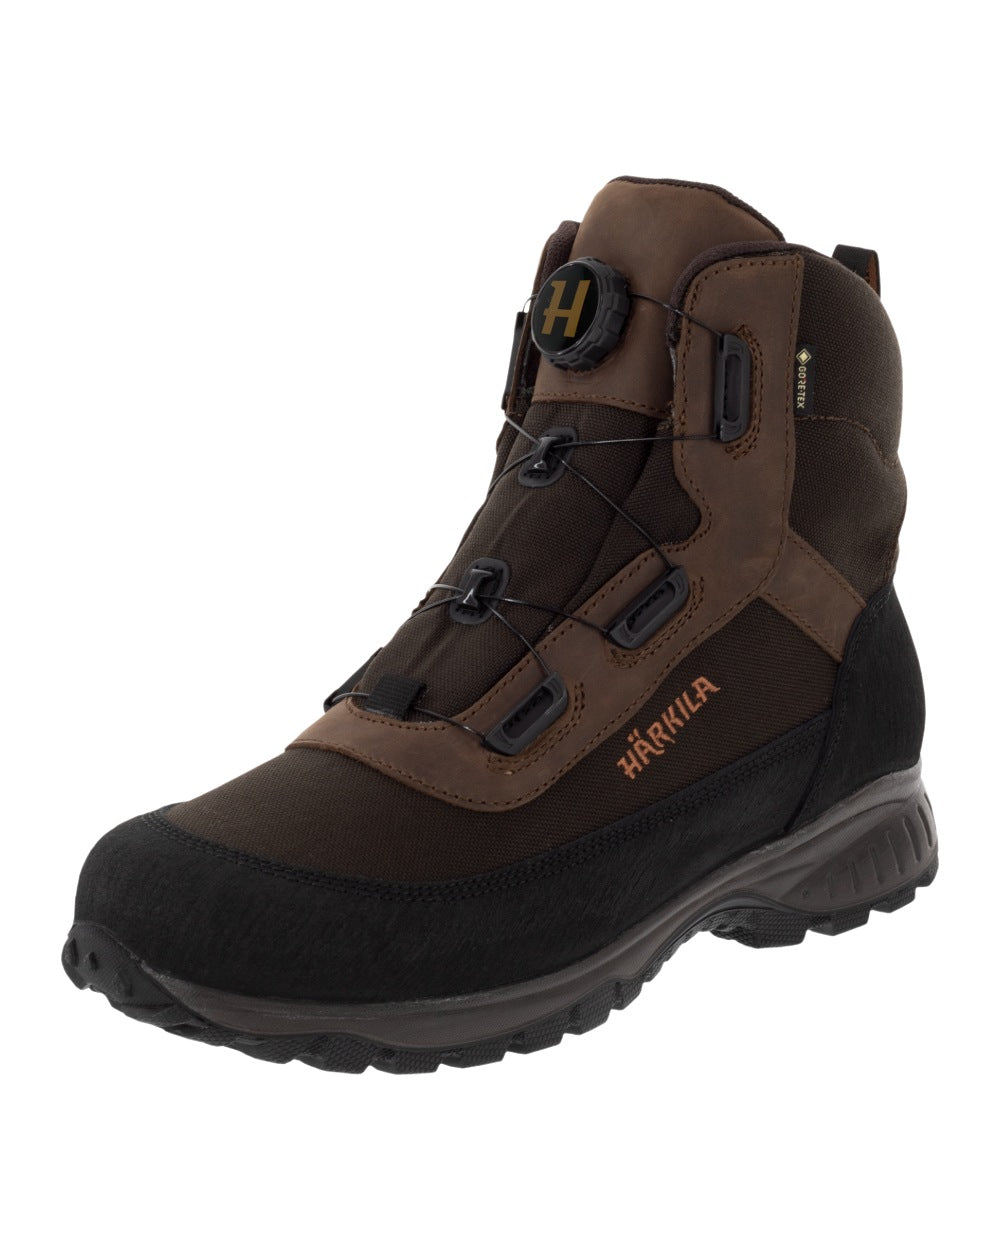 Harkila Atammik GTX Waterproof Boots in Dark Brown